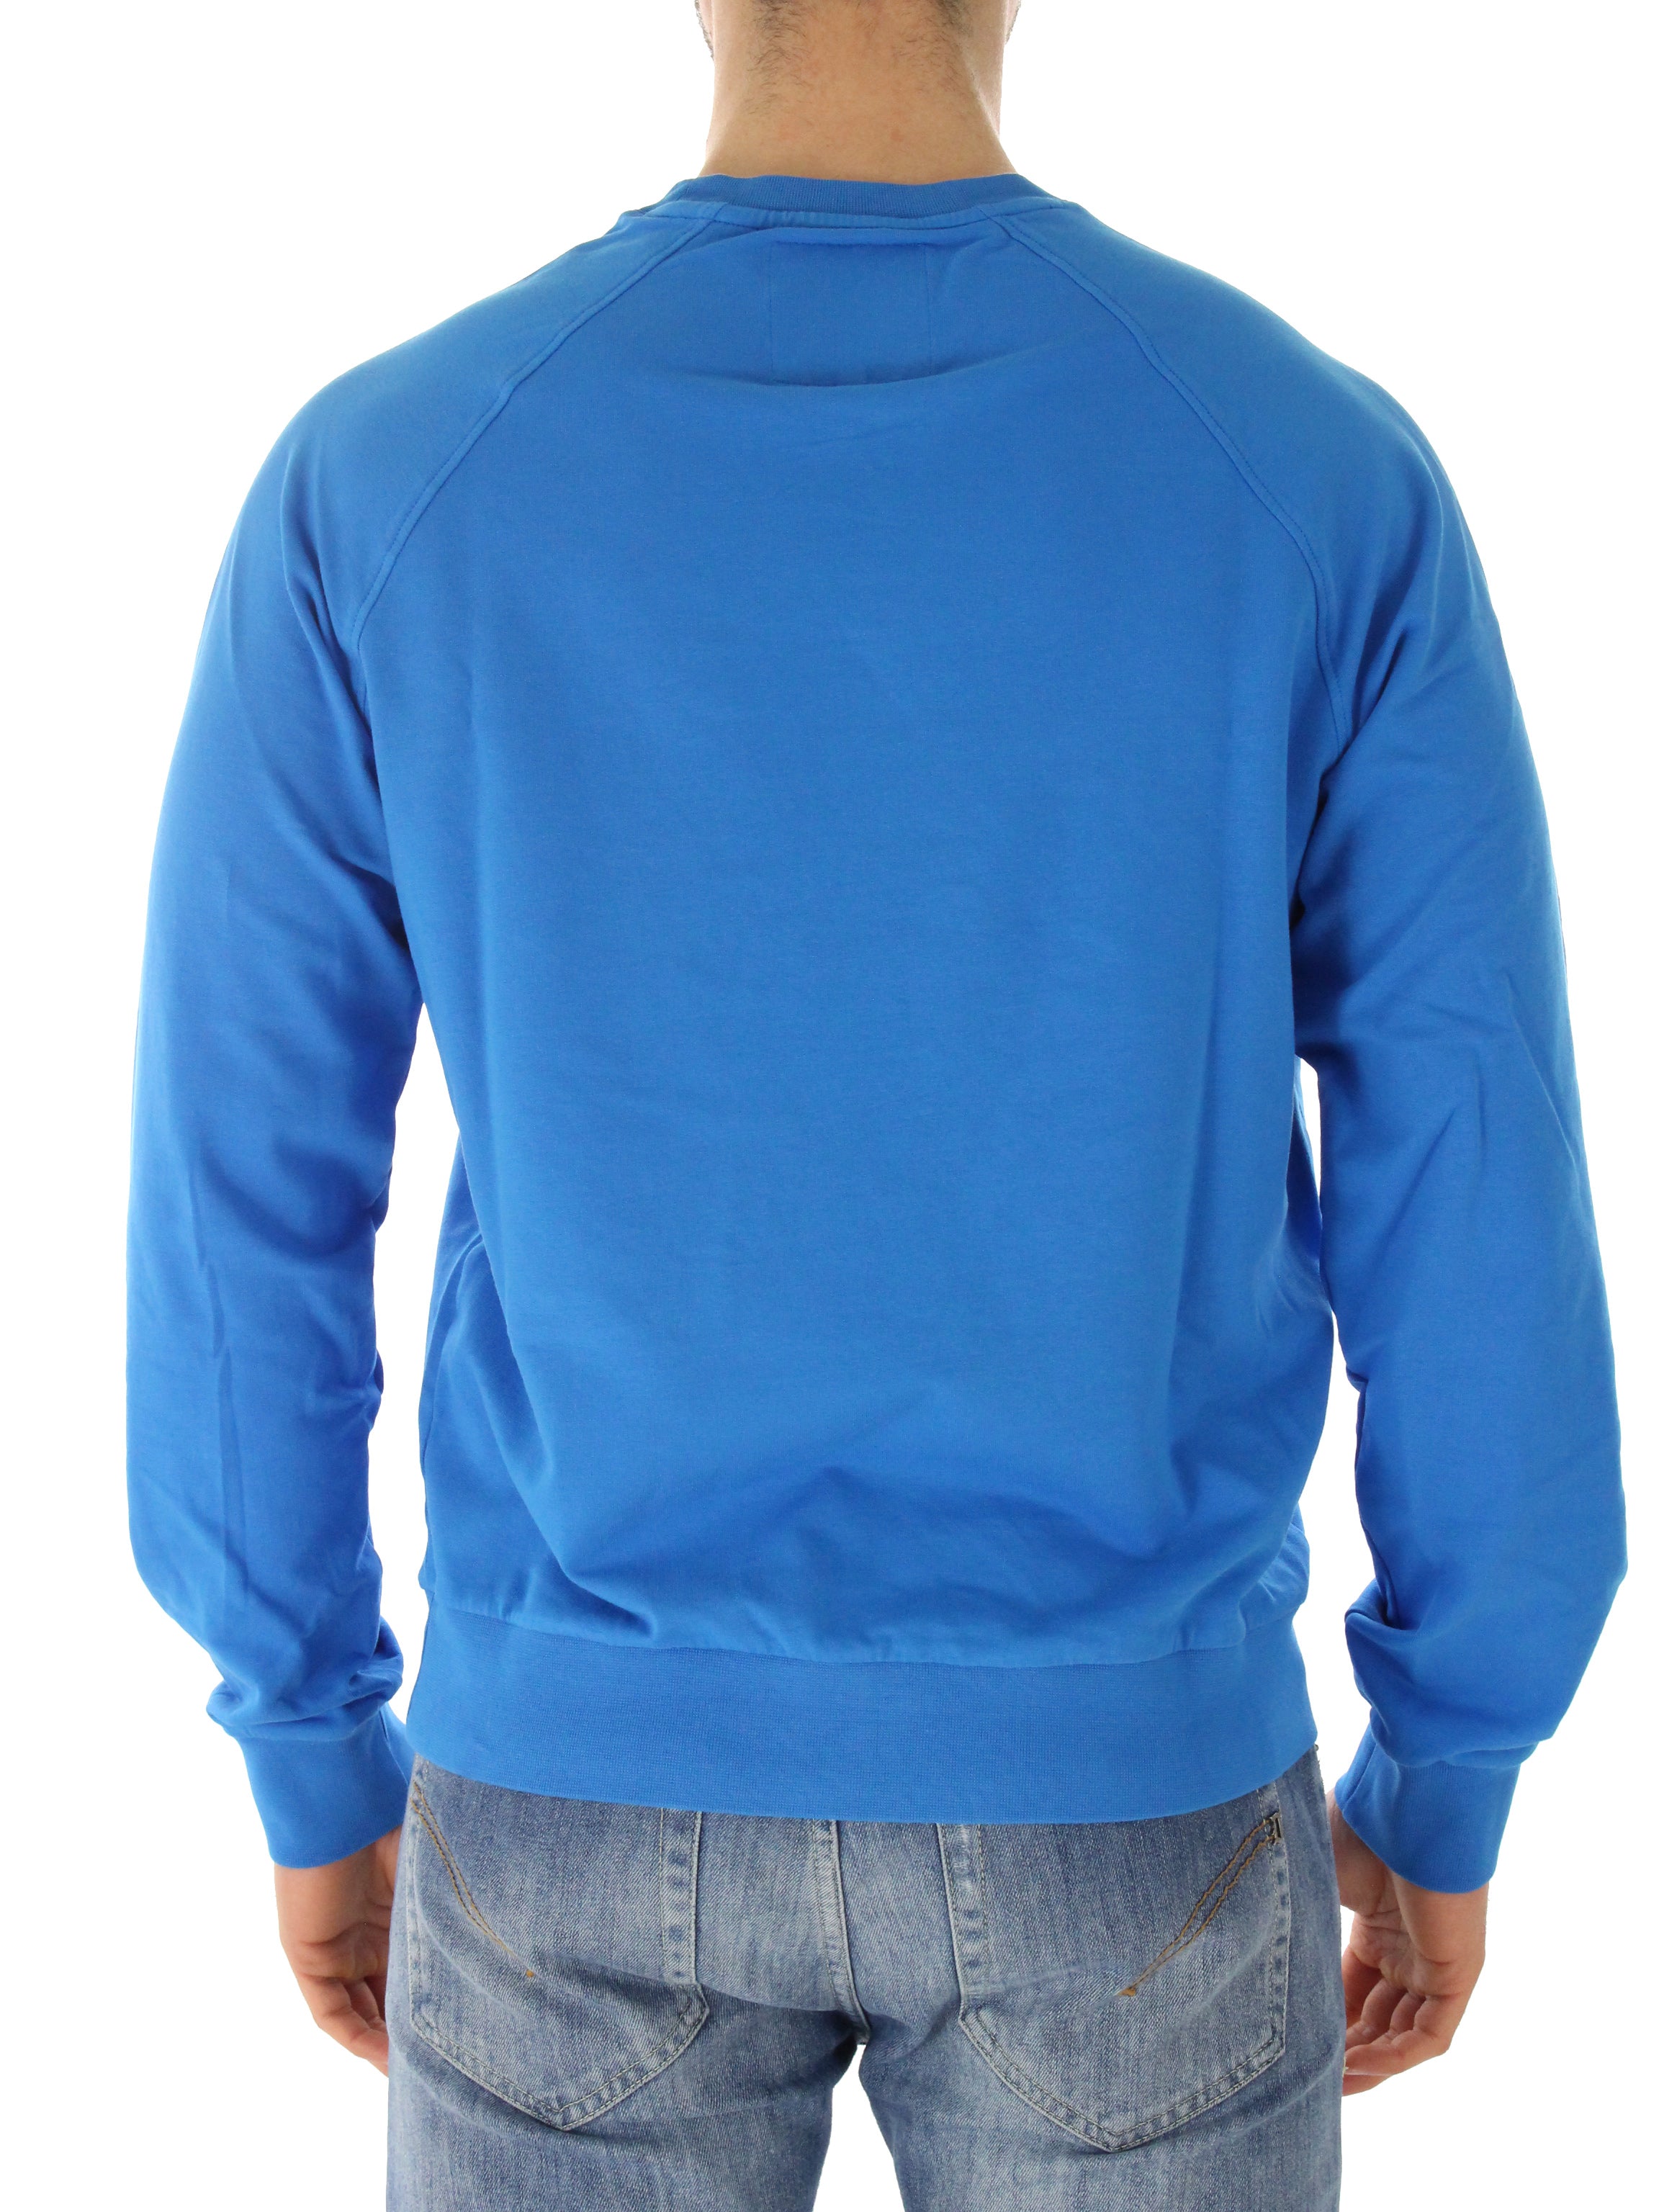 Paricollo on a blue mh-861 sweatshirt